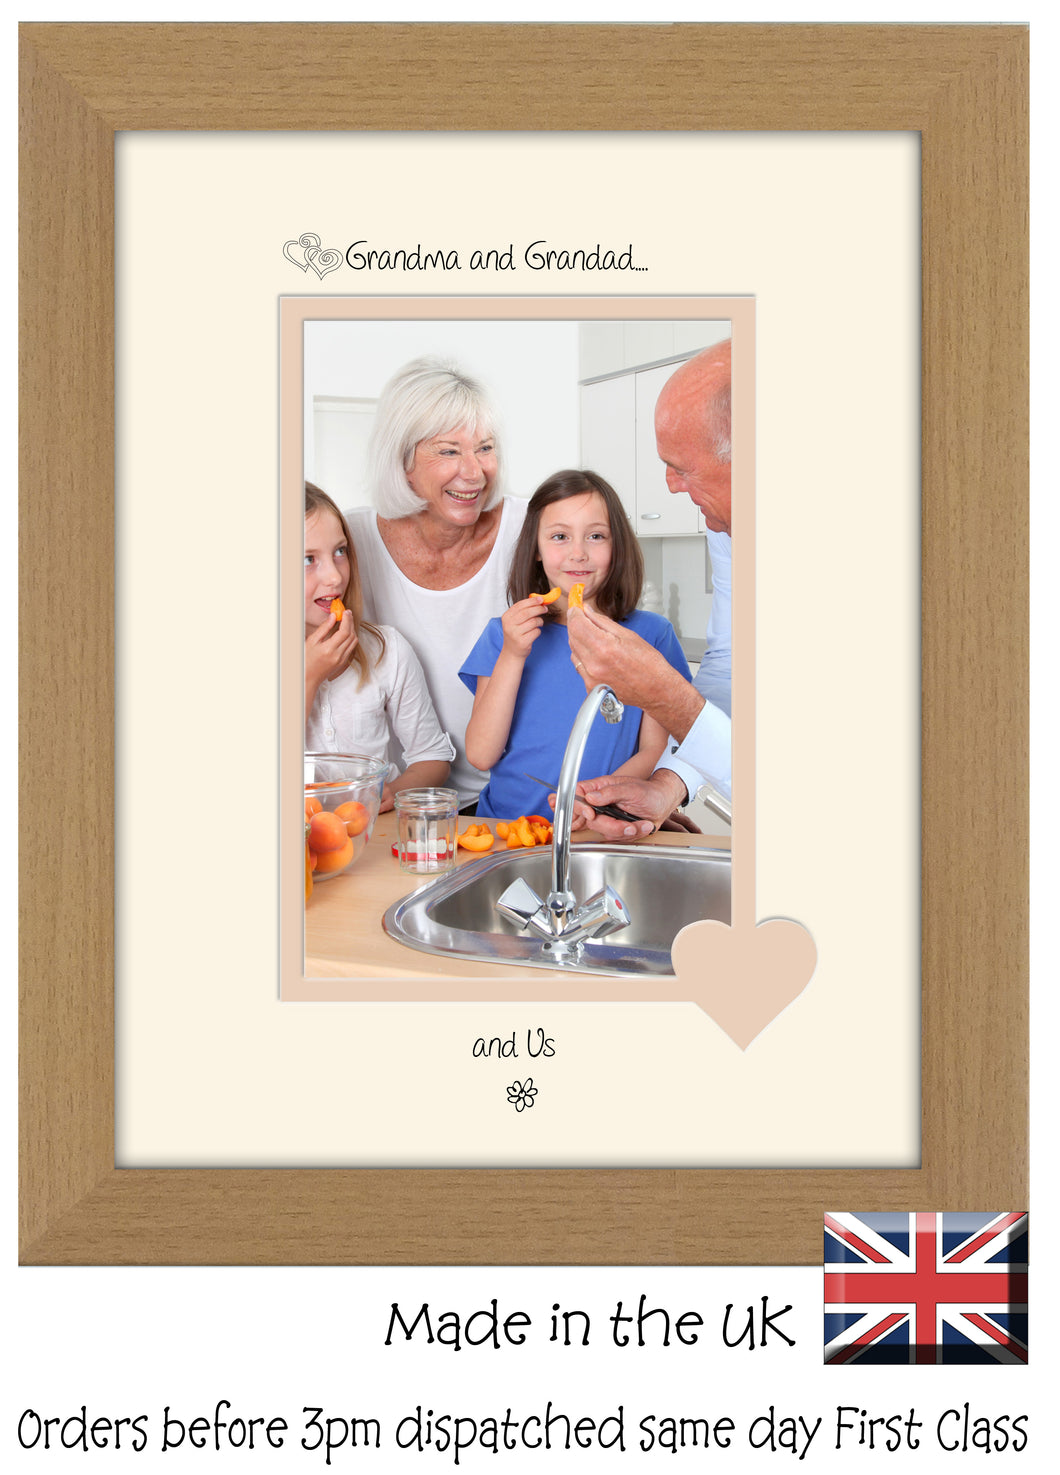 Grandma & Grandad Photo Frame - Grandma and Grandad… ...and us! Portrait photo frame 6